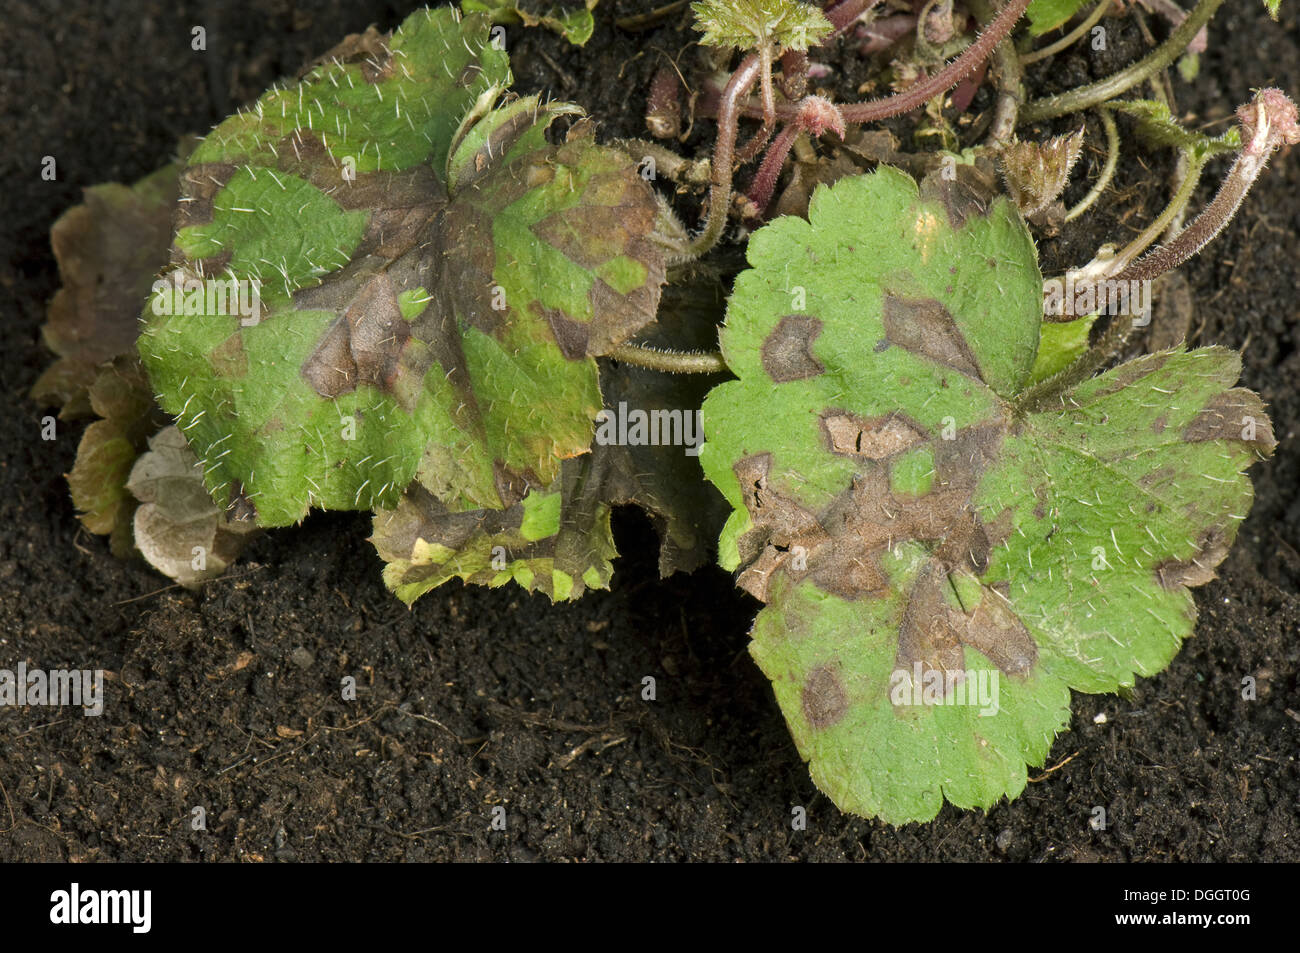 Foliar nematode, Aphelenchoides spp, angular leaf spotting on an ornamental anemone plant leaves Stock Photo